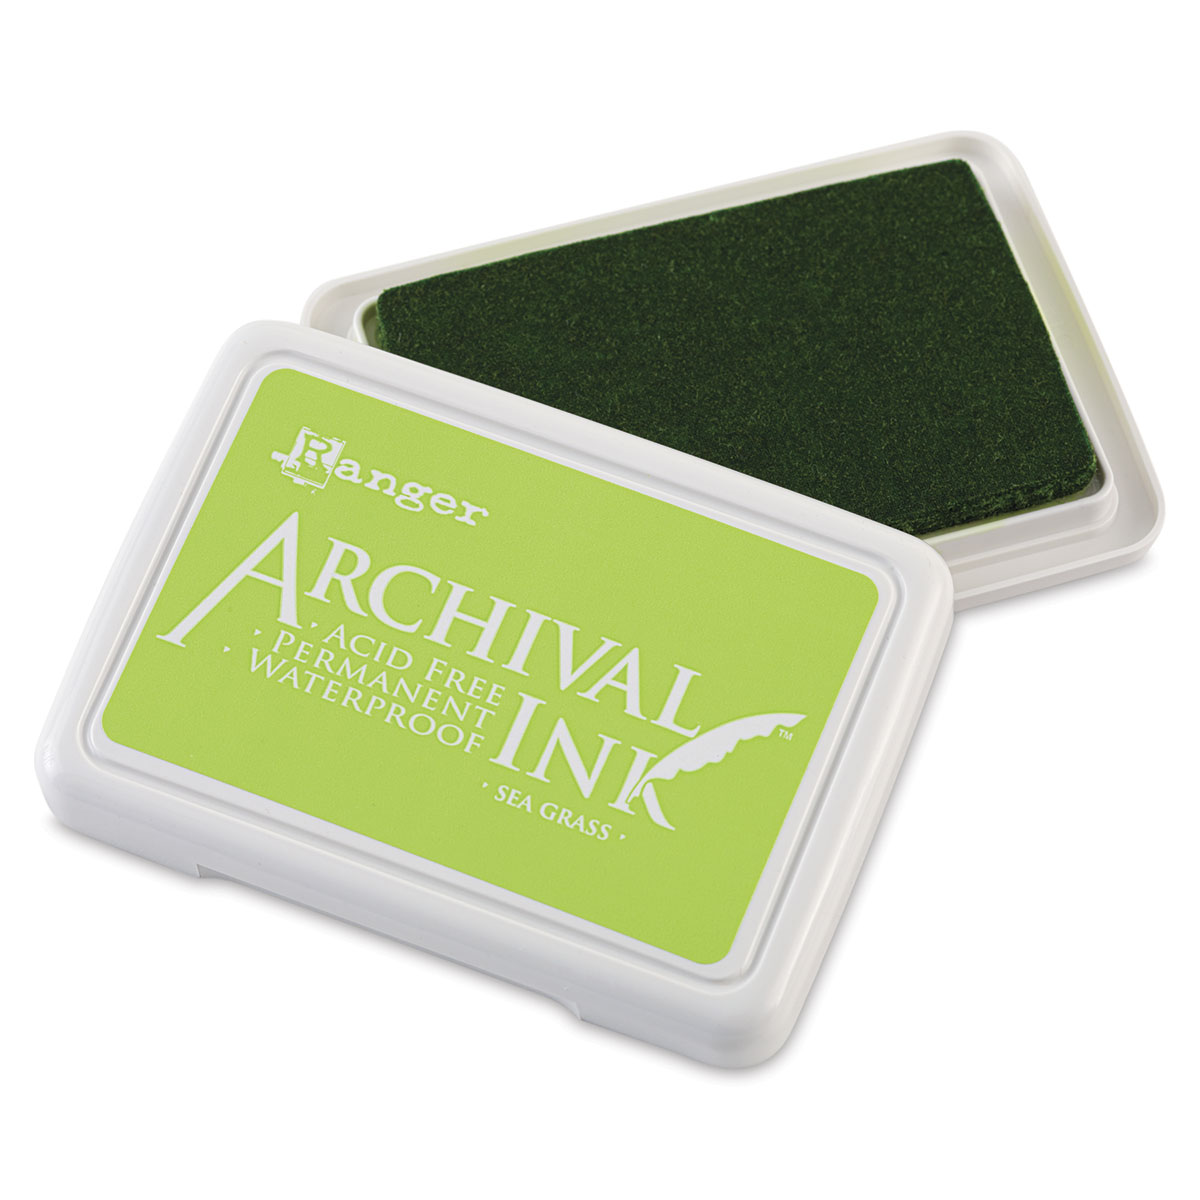 Ranger Archival Ink JET BLACK Permanent Ink Stamp Pad #3 JUMBO Size